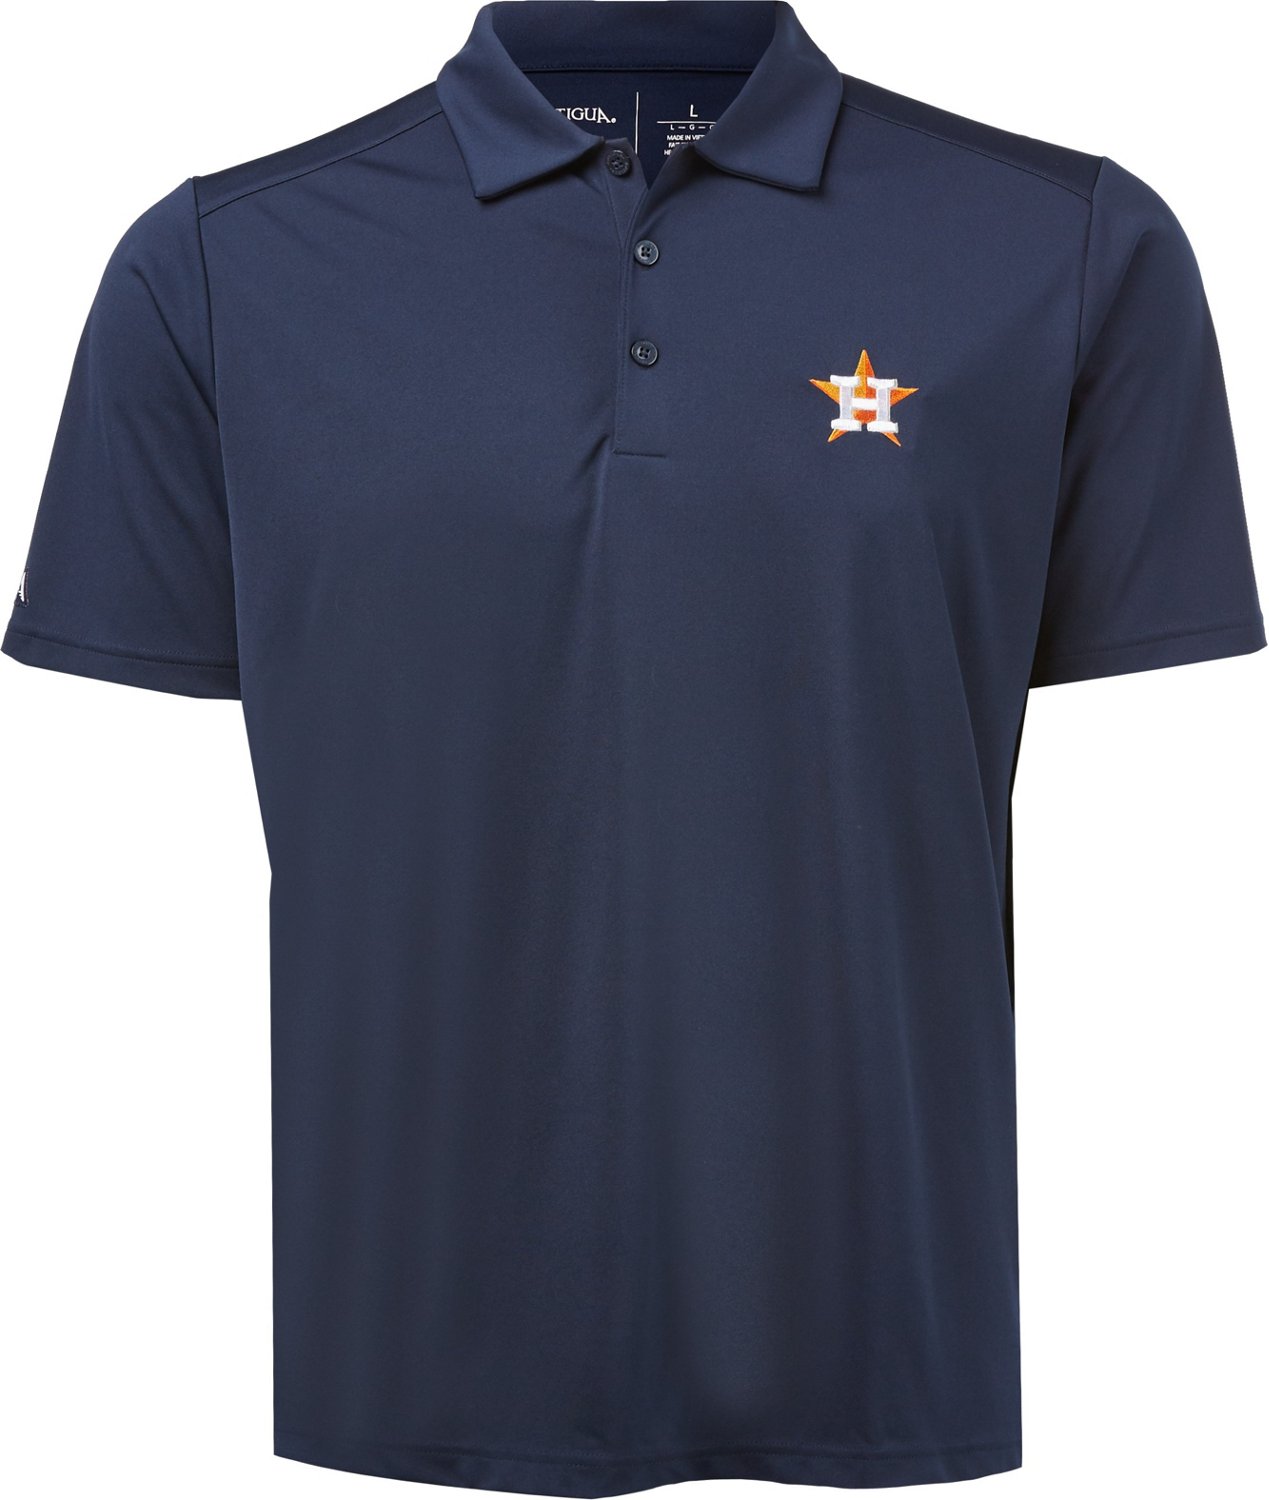 academy astros fishing shirt